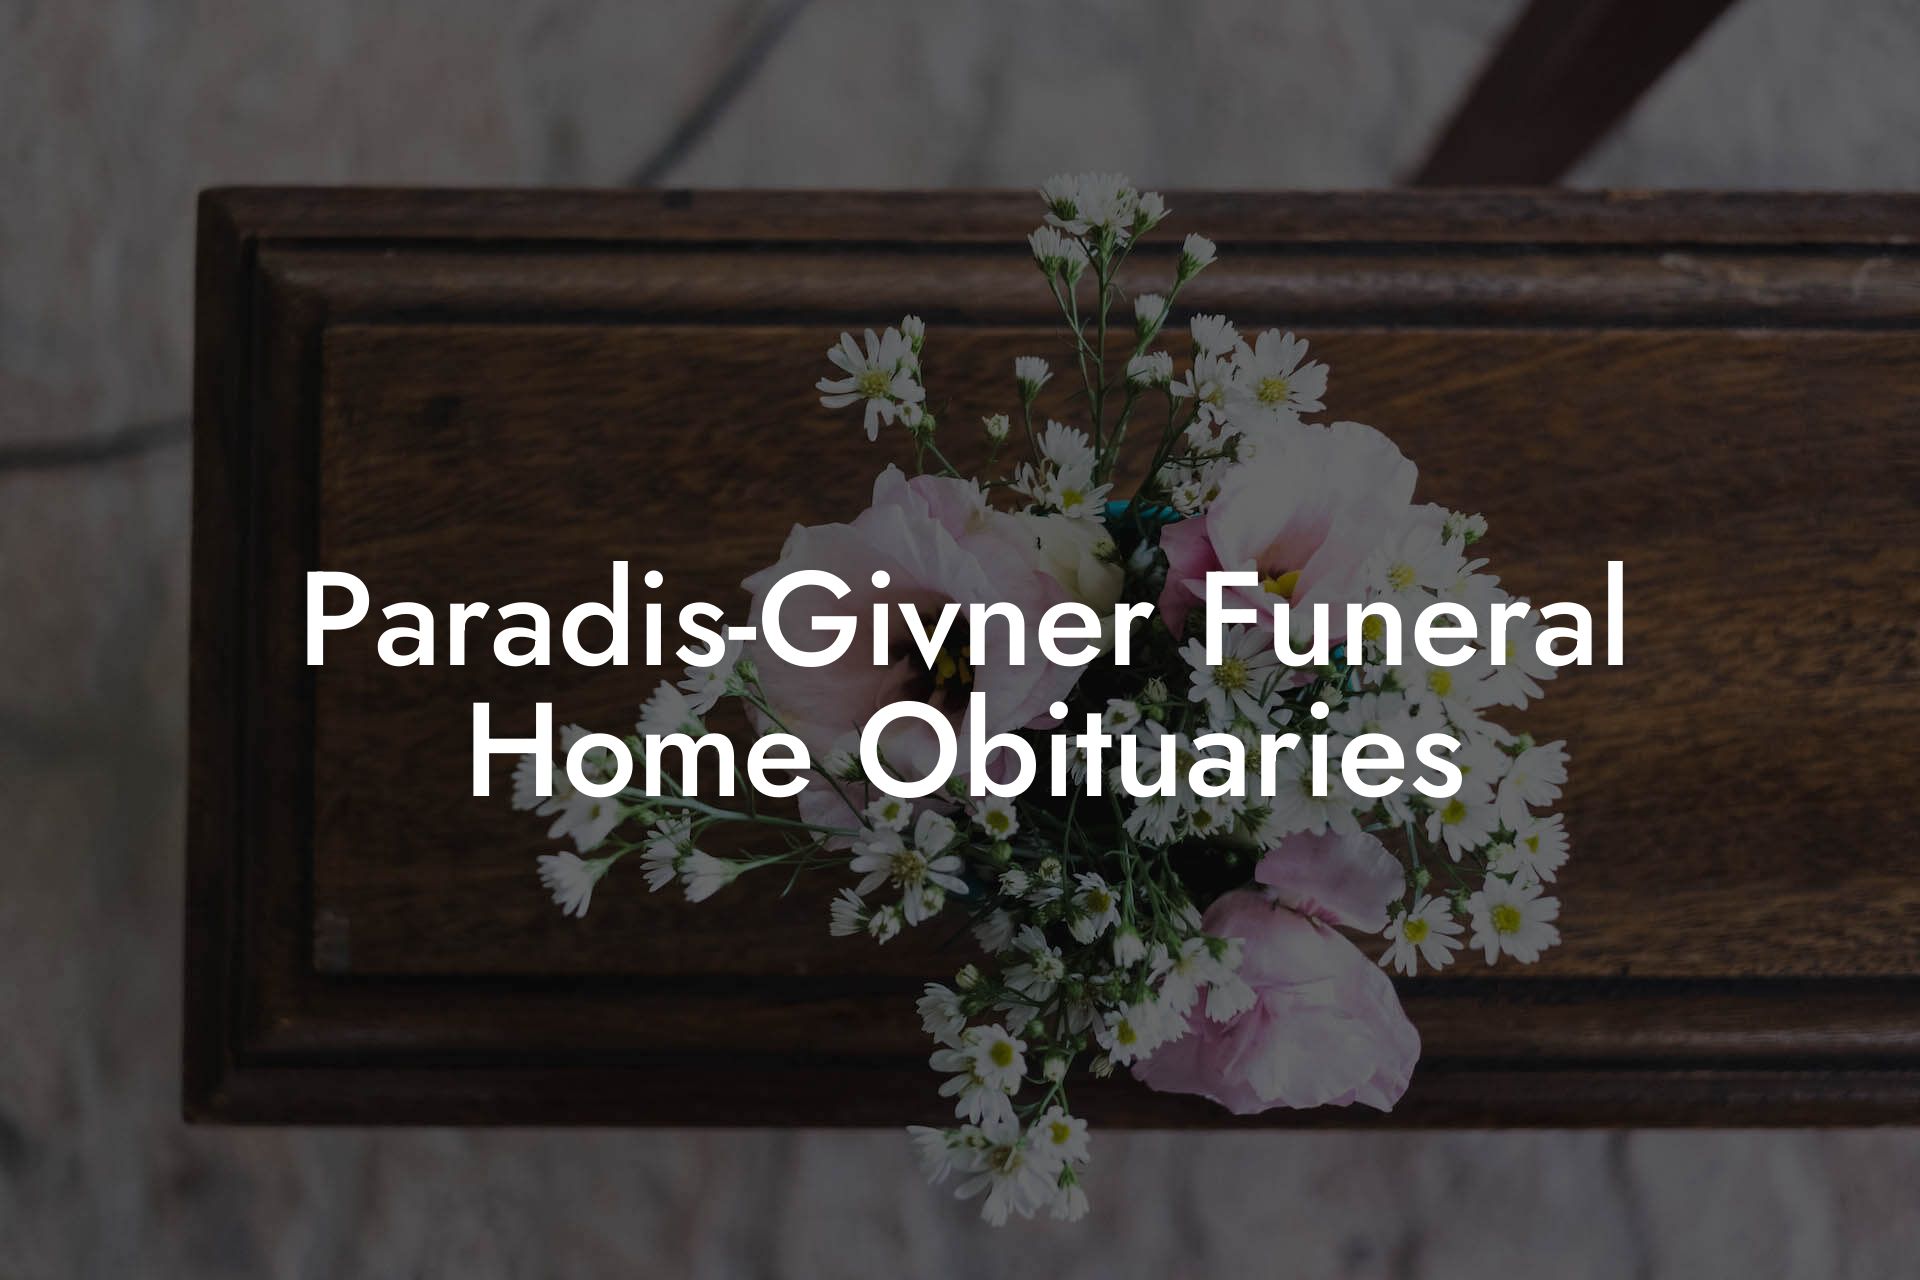 Paradis-Givner Funeral Home Obituaries